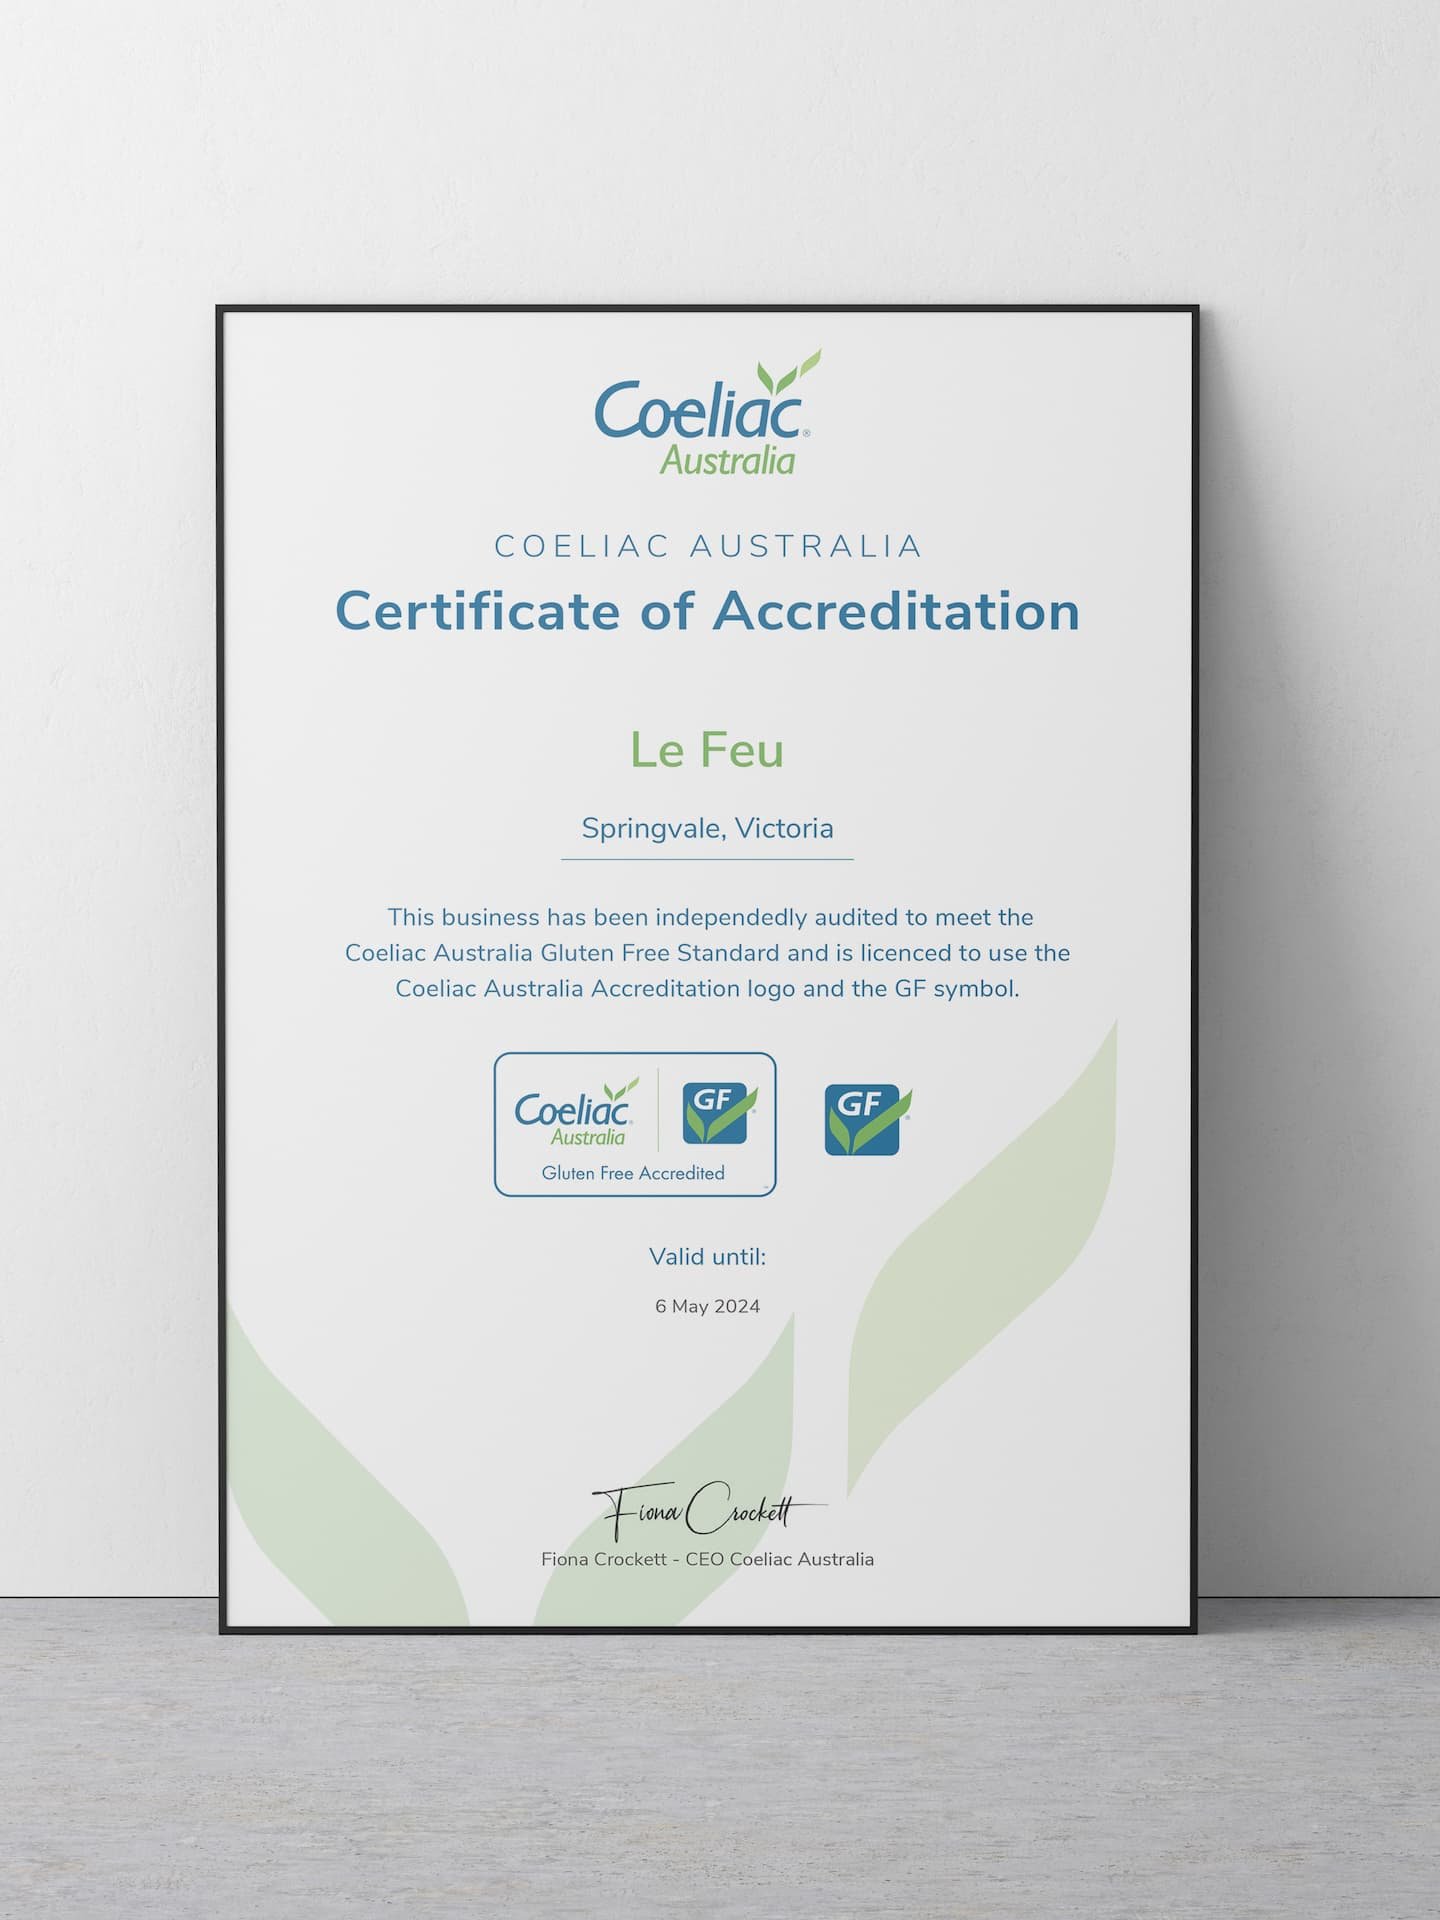 gluten free coeliac australia certificate for Le Feu Springvale.jpg